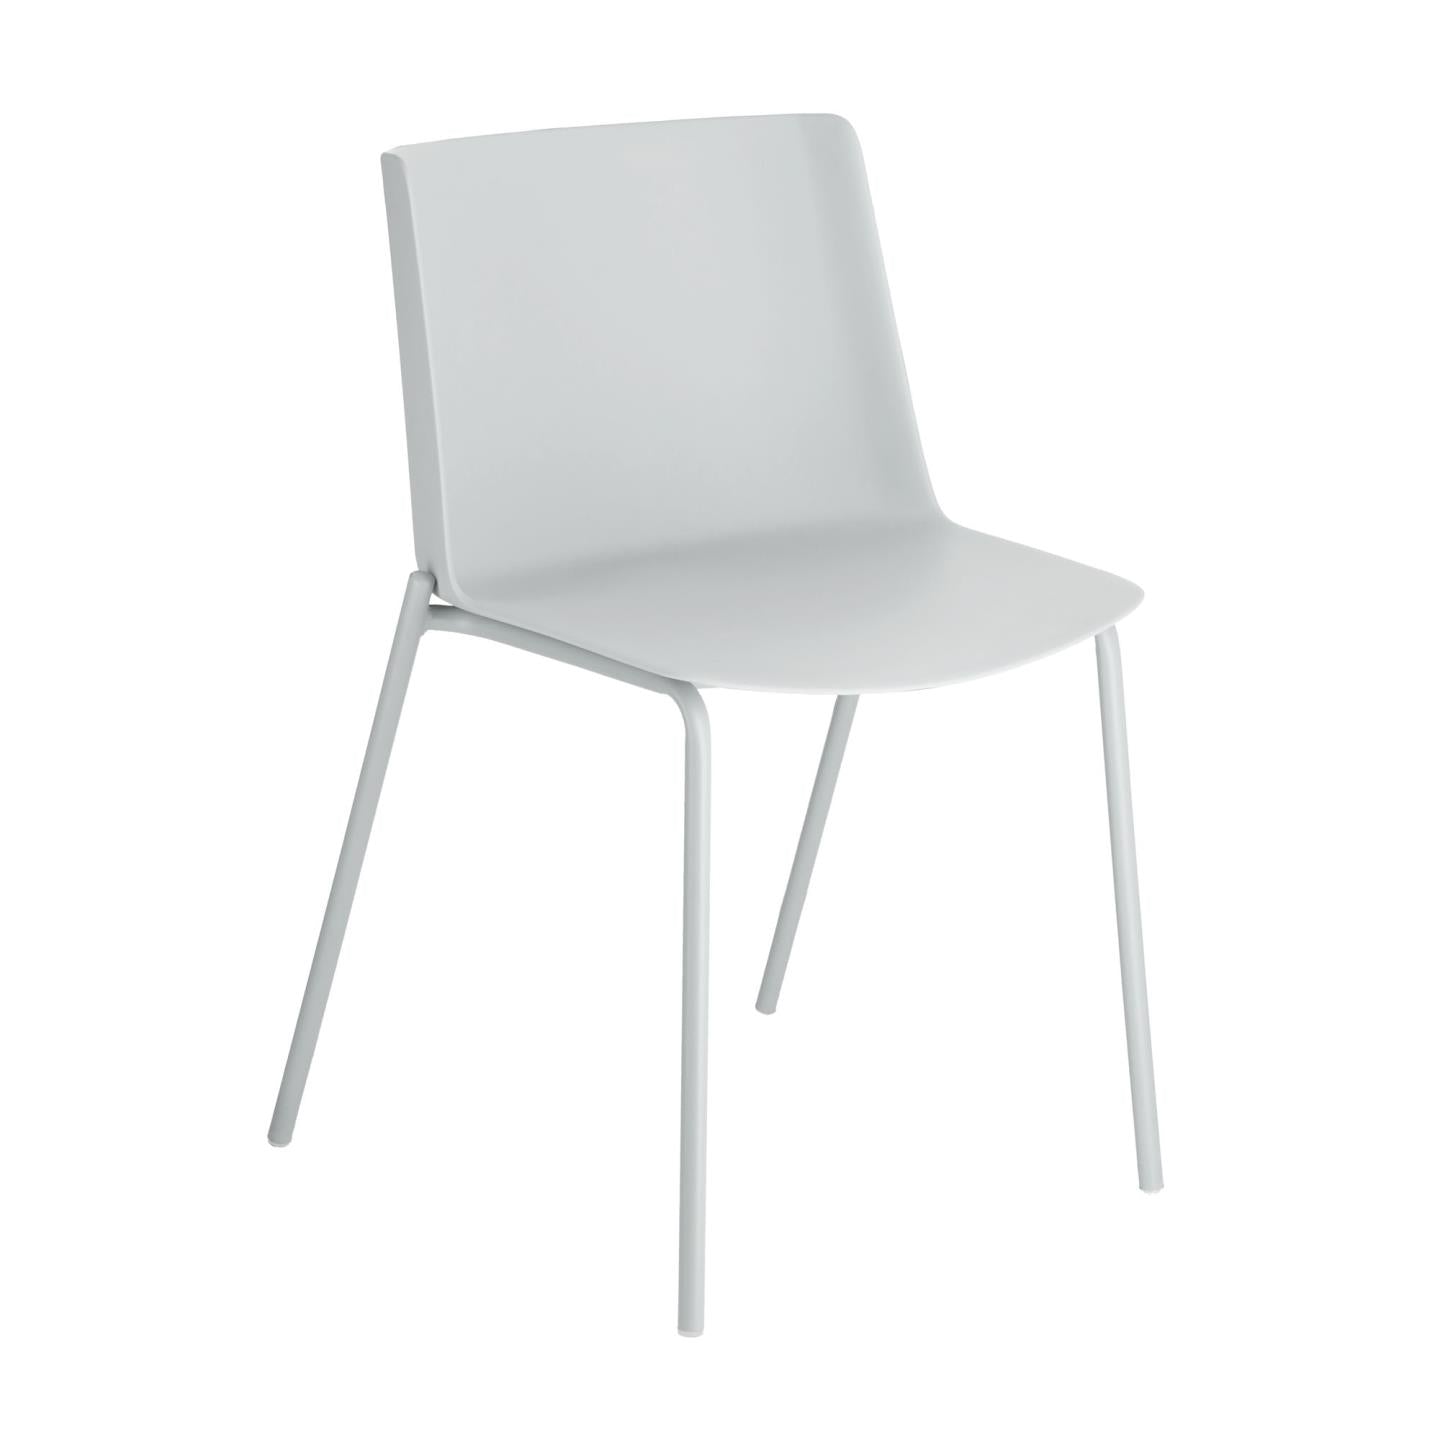 Hannia grey chair